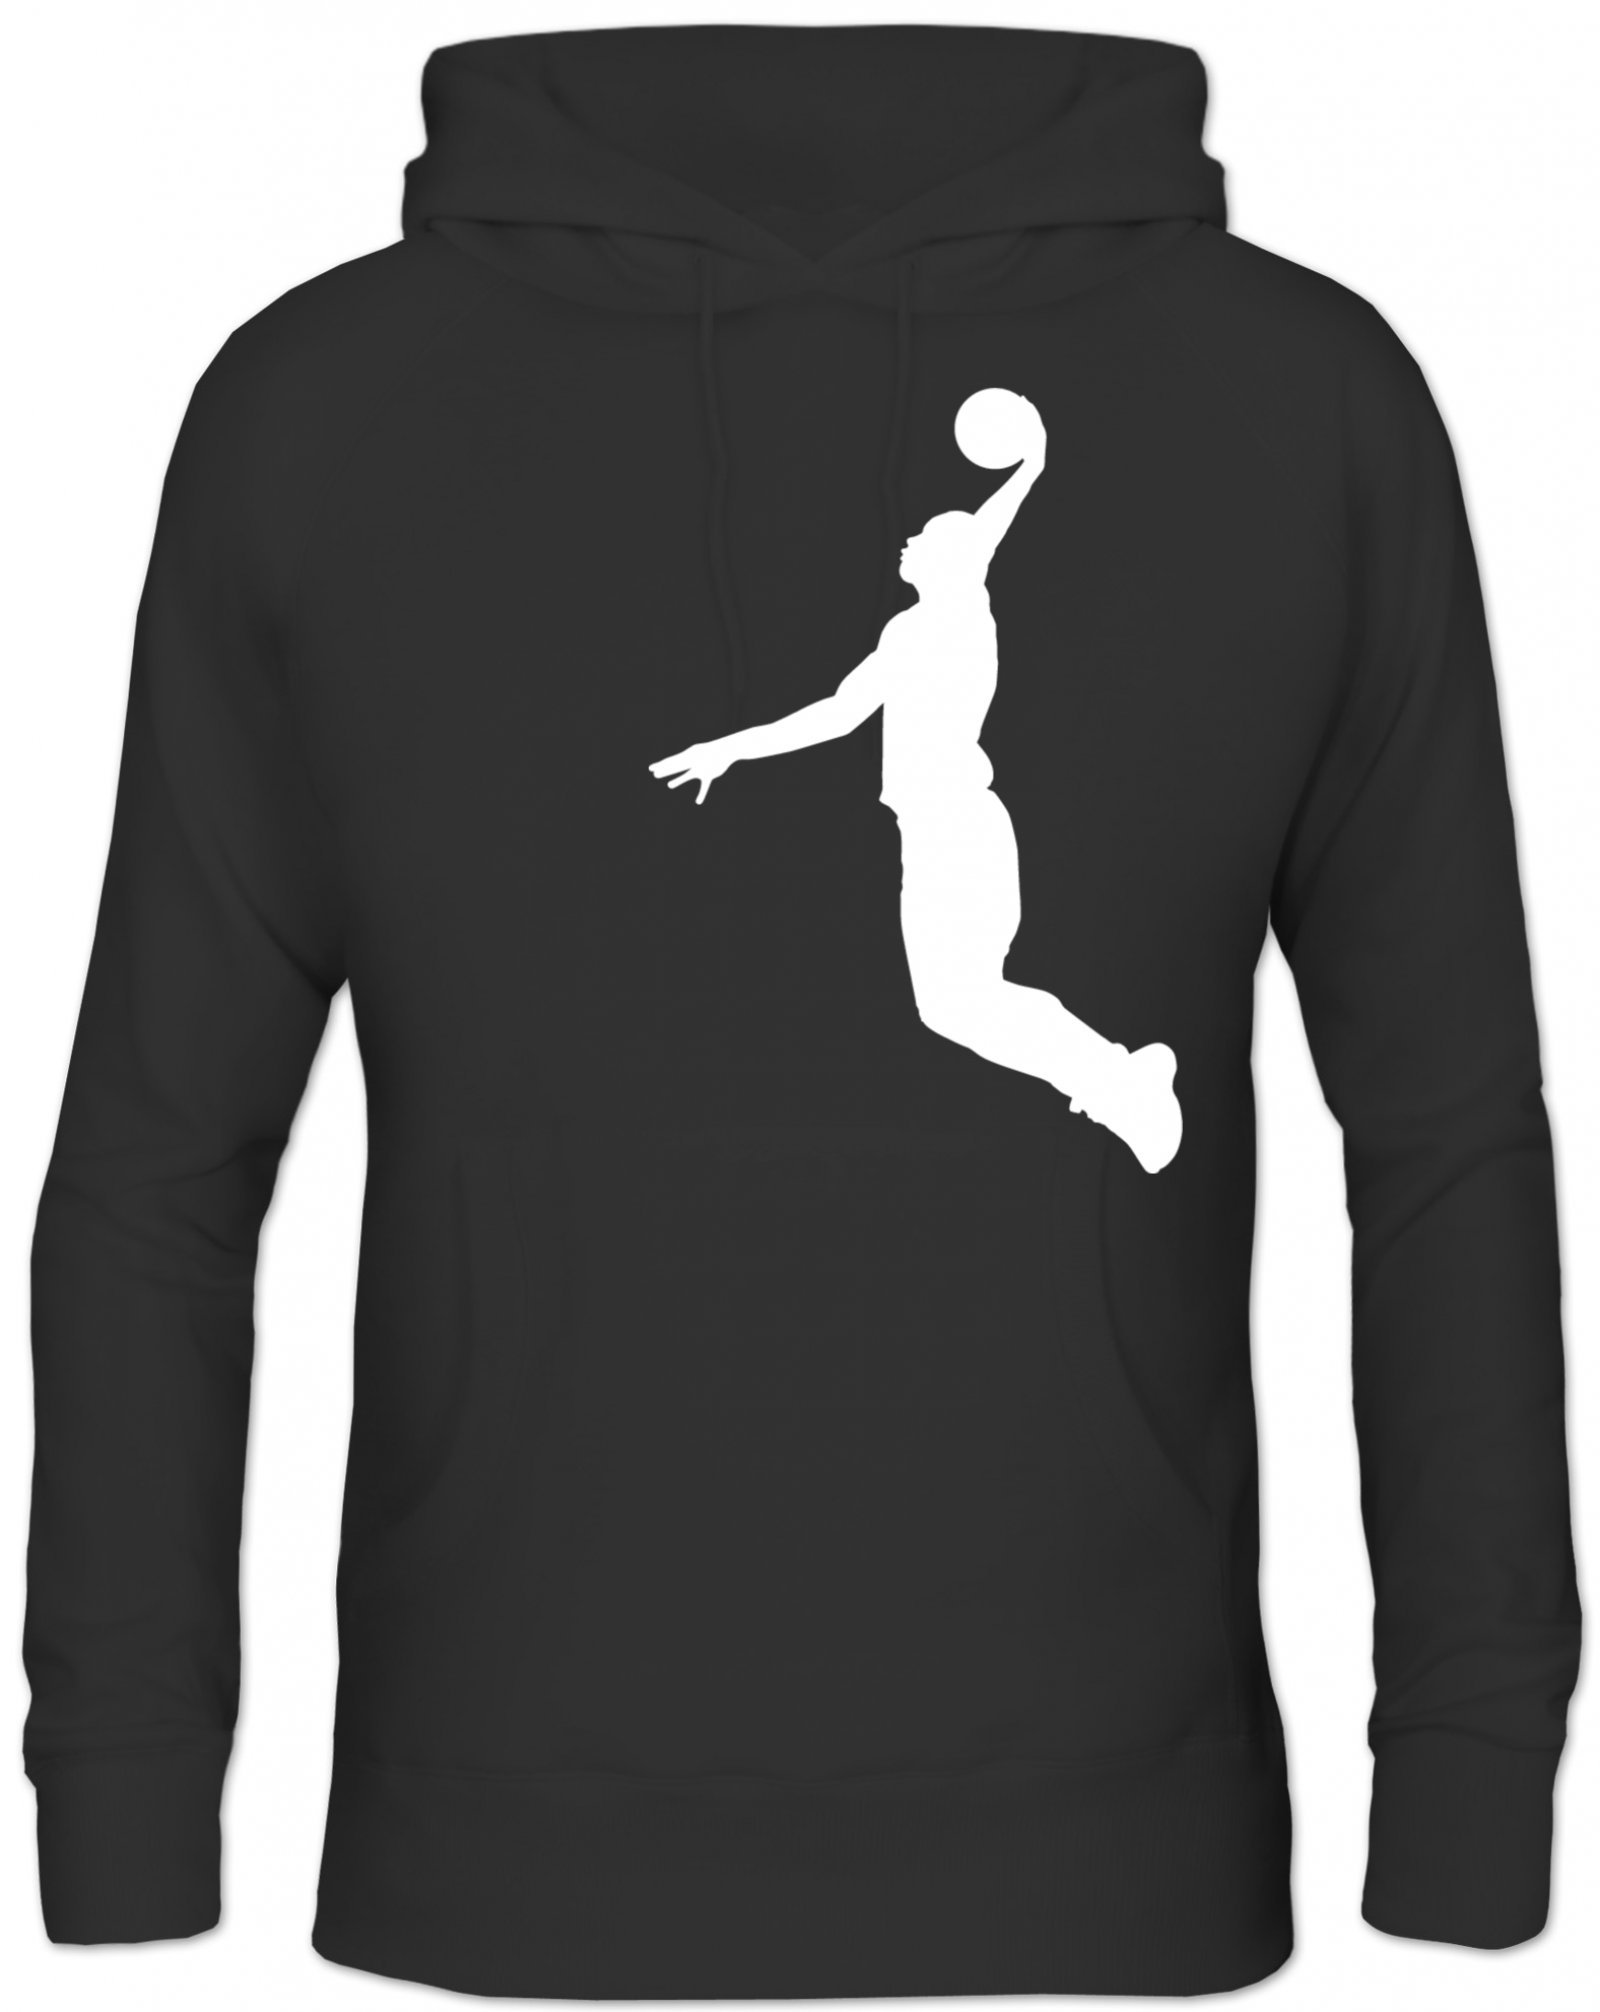 Shirtstreet24, BASKETBALL PLAYER, NBA Sport Kapuzen Sweatshirt - Pullover Hoodie, Größe: L,Schwarz